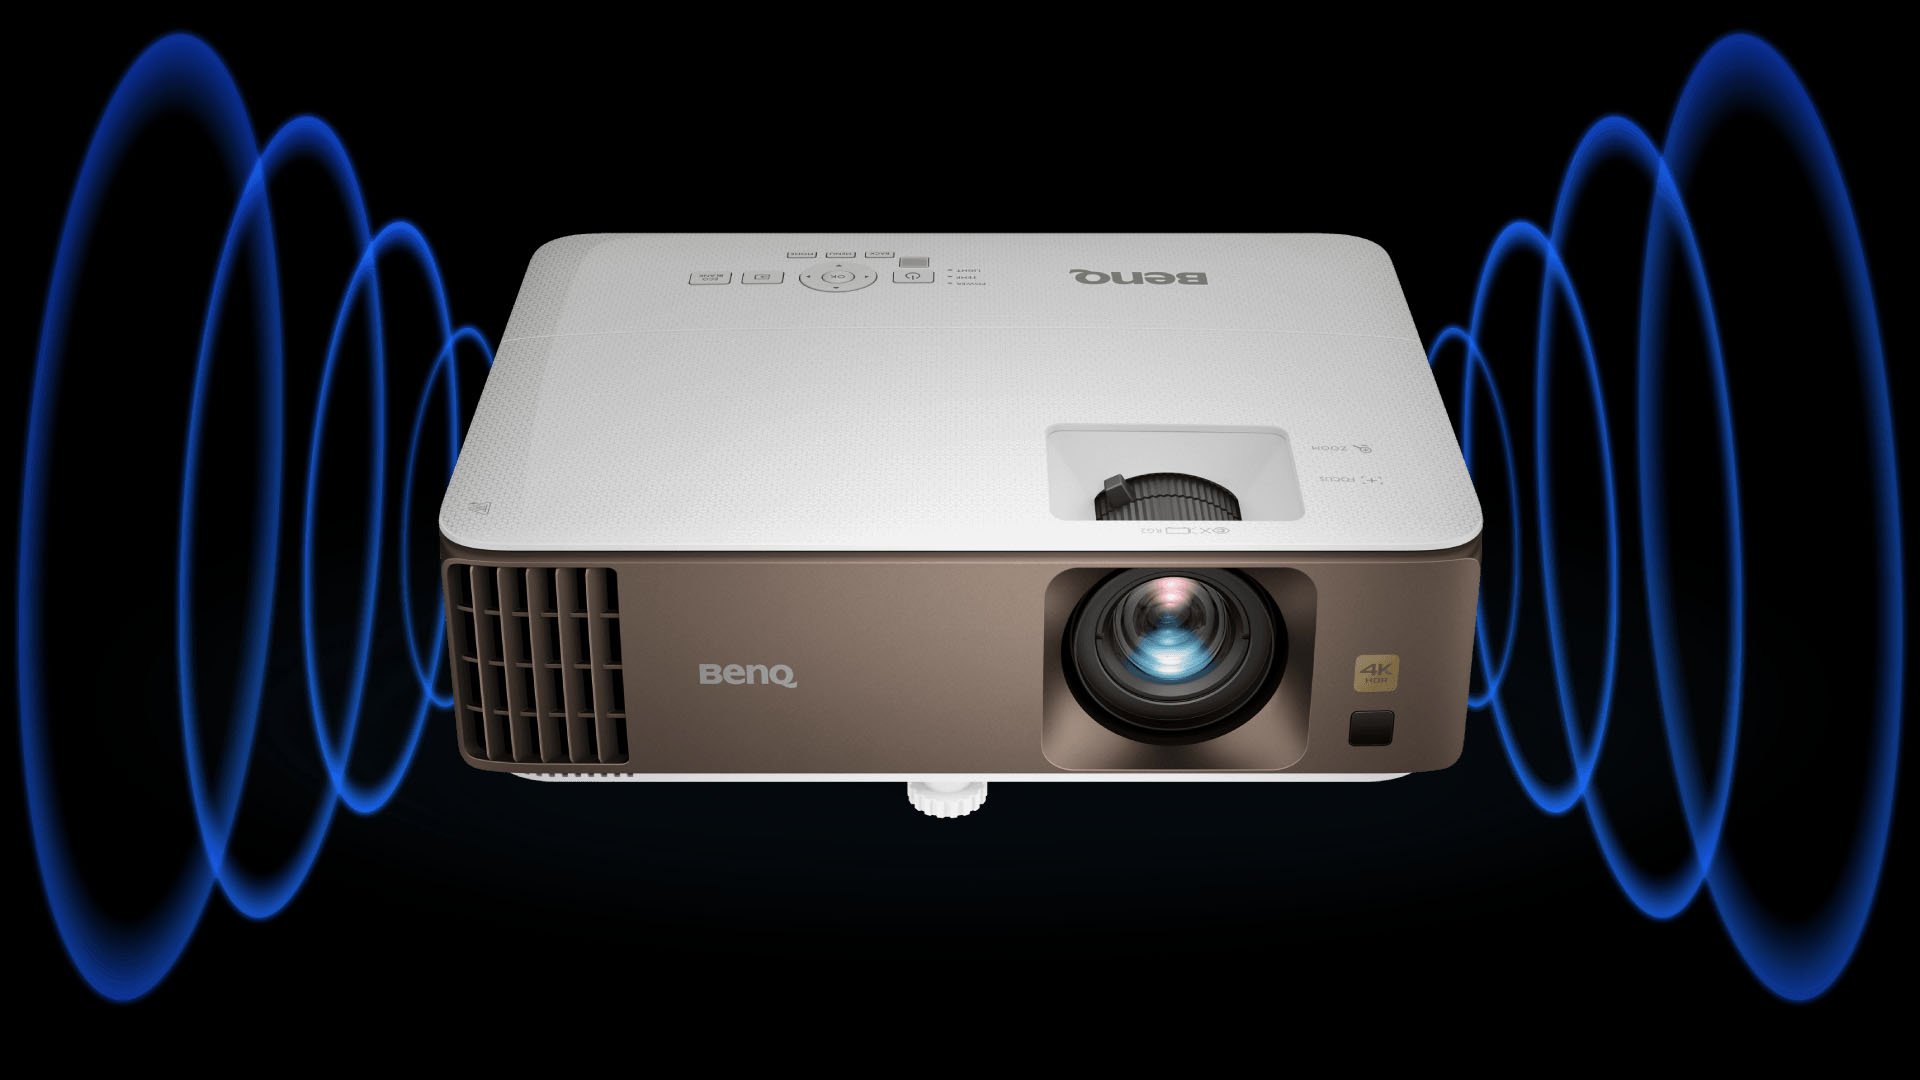 BenQ audio-enhancing technology with 5W speaker